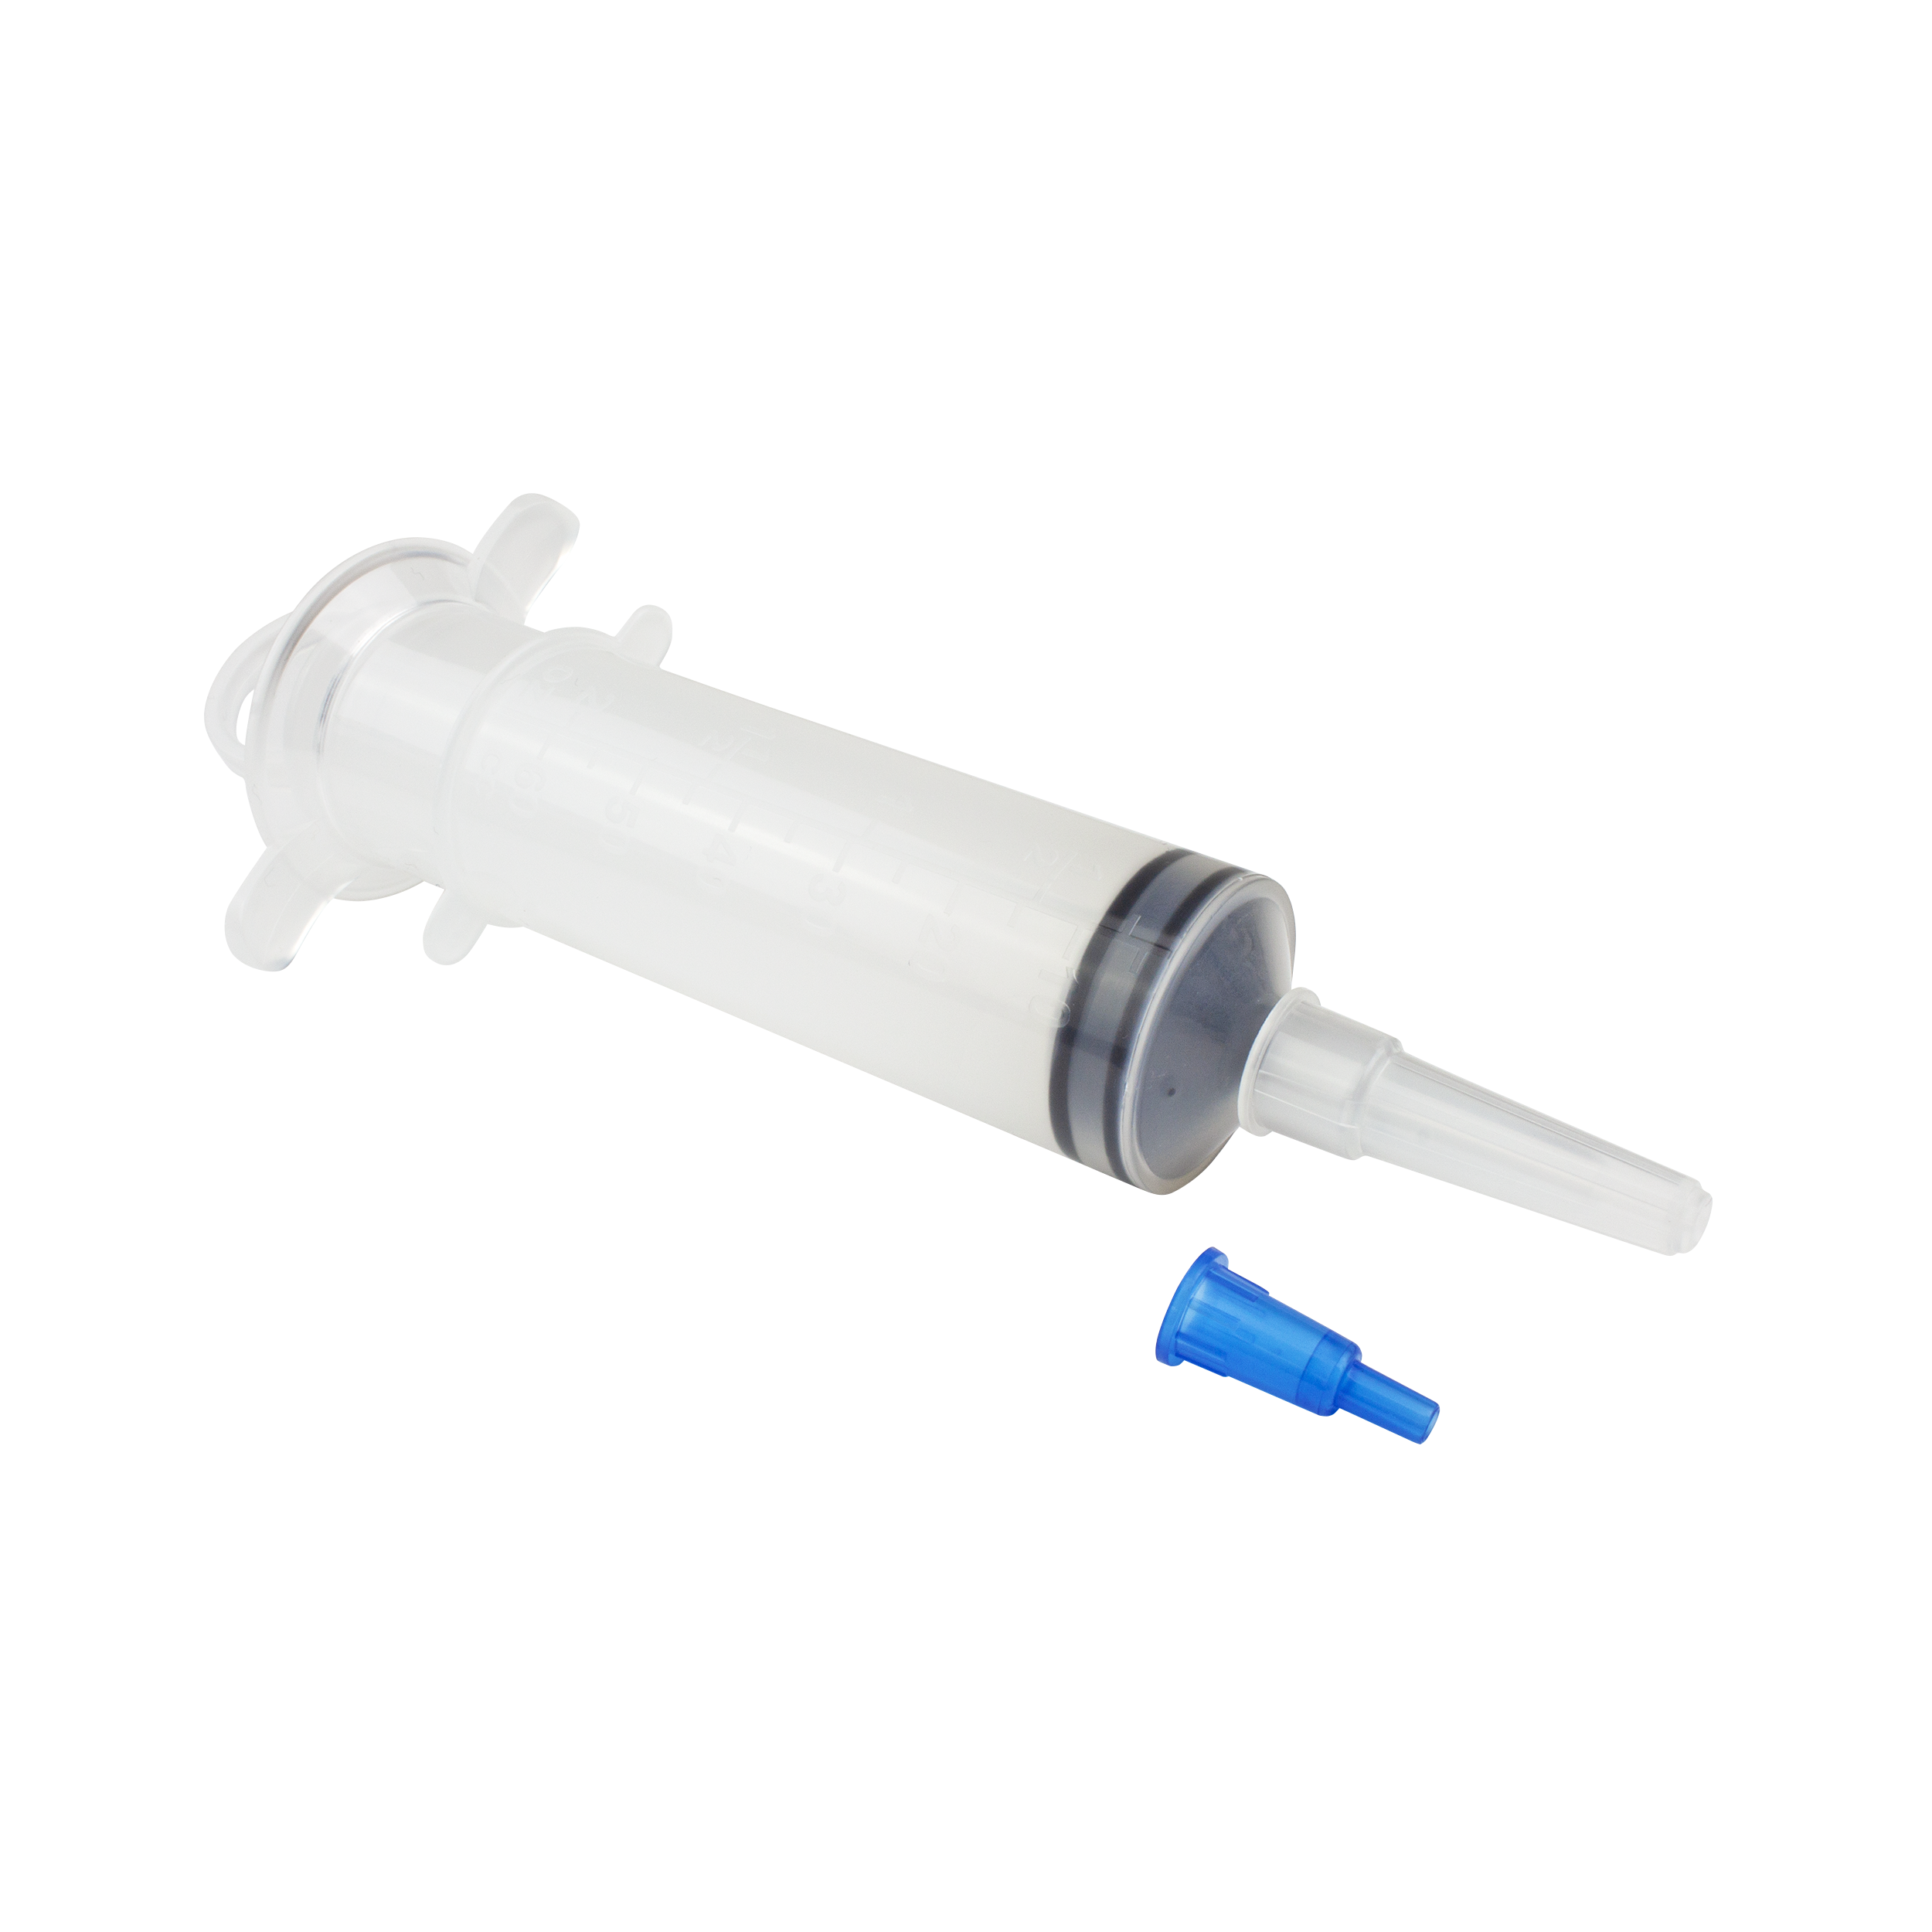 Enteral Feeding Syringe (60cc) for Pole Bag - Non-Sterile